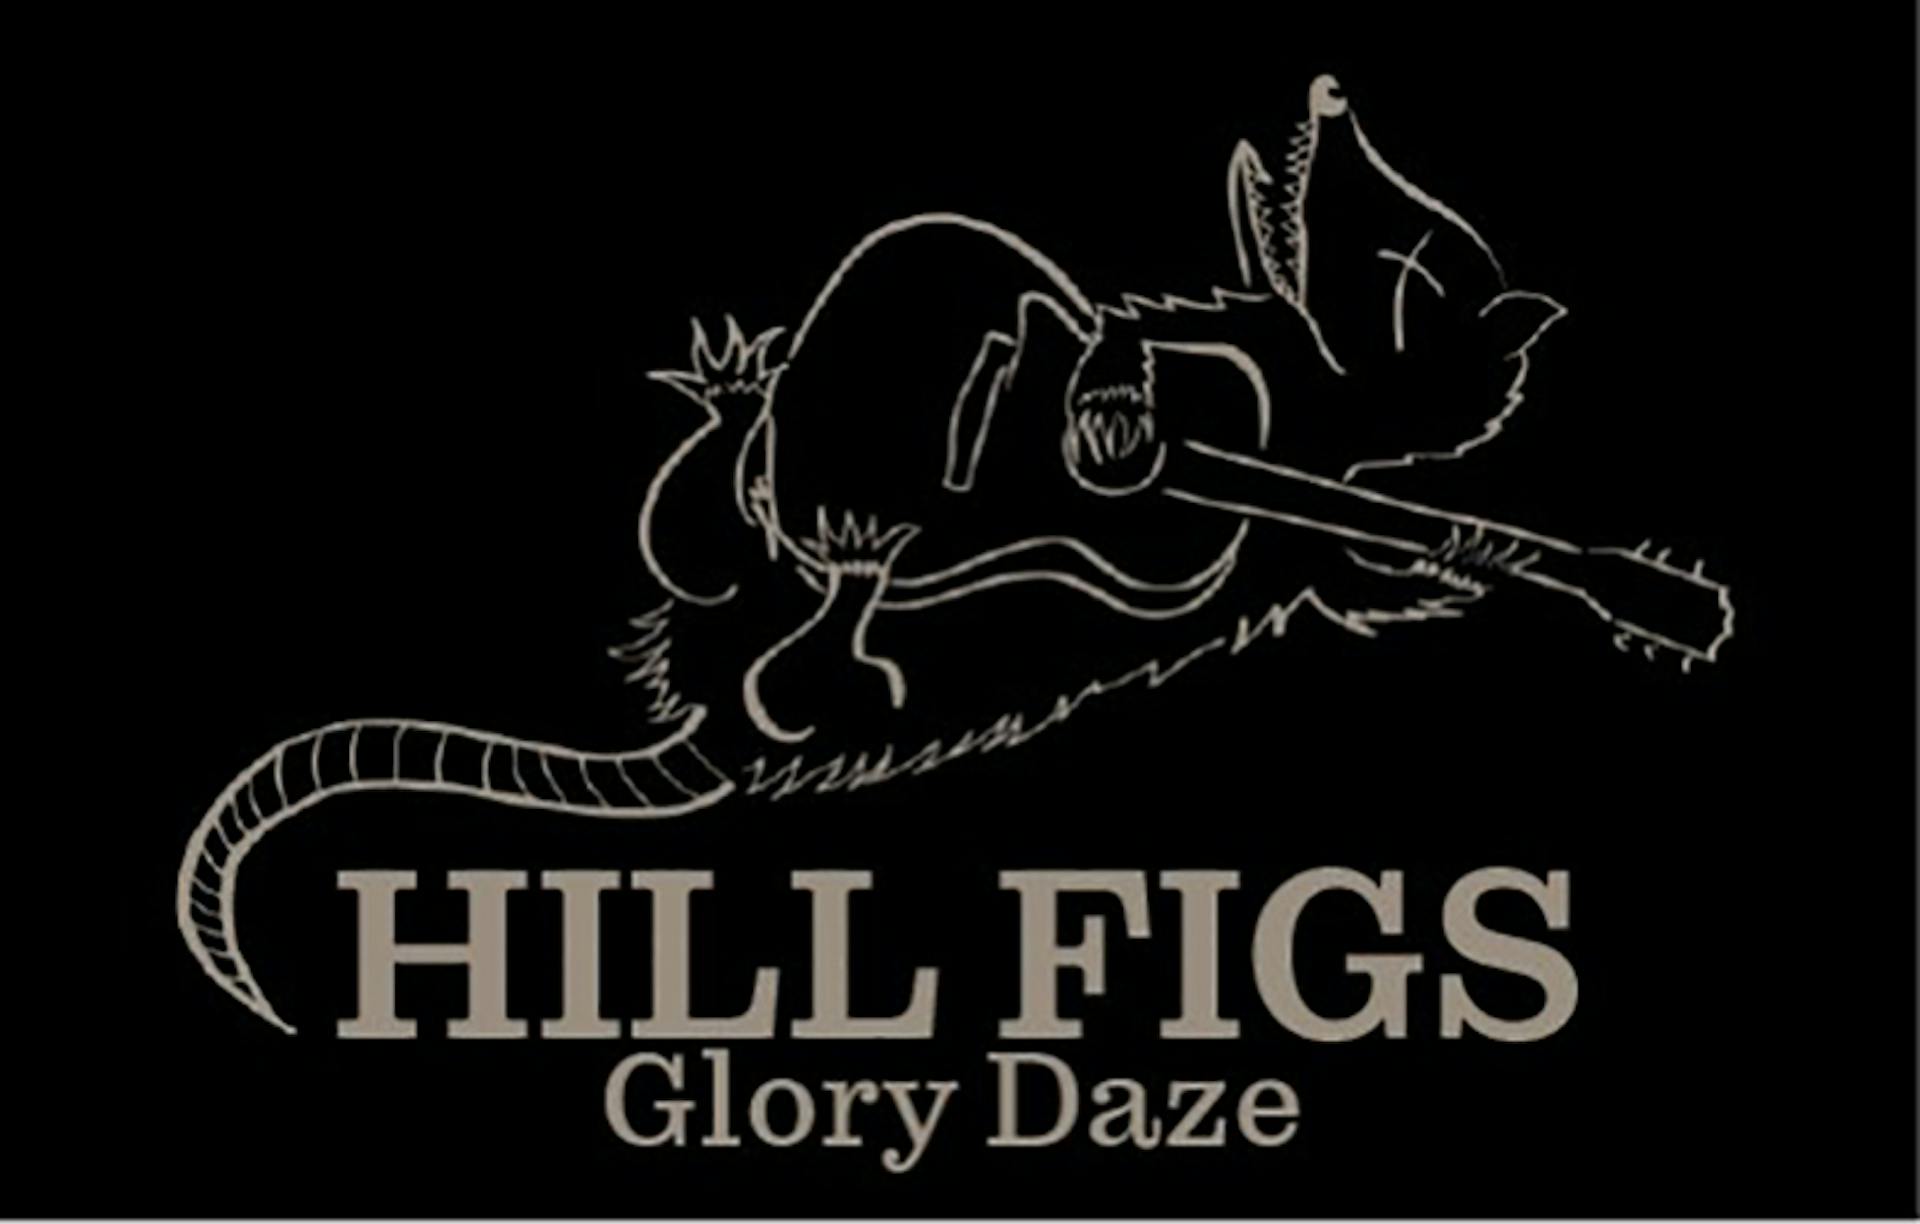 Hill Figs